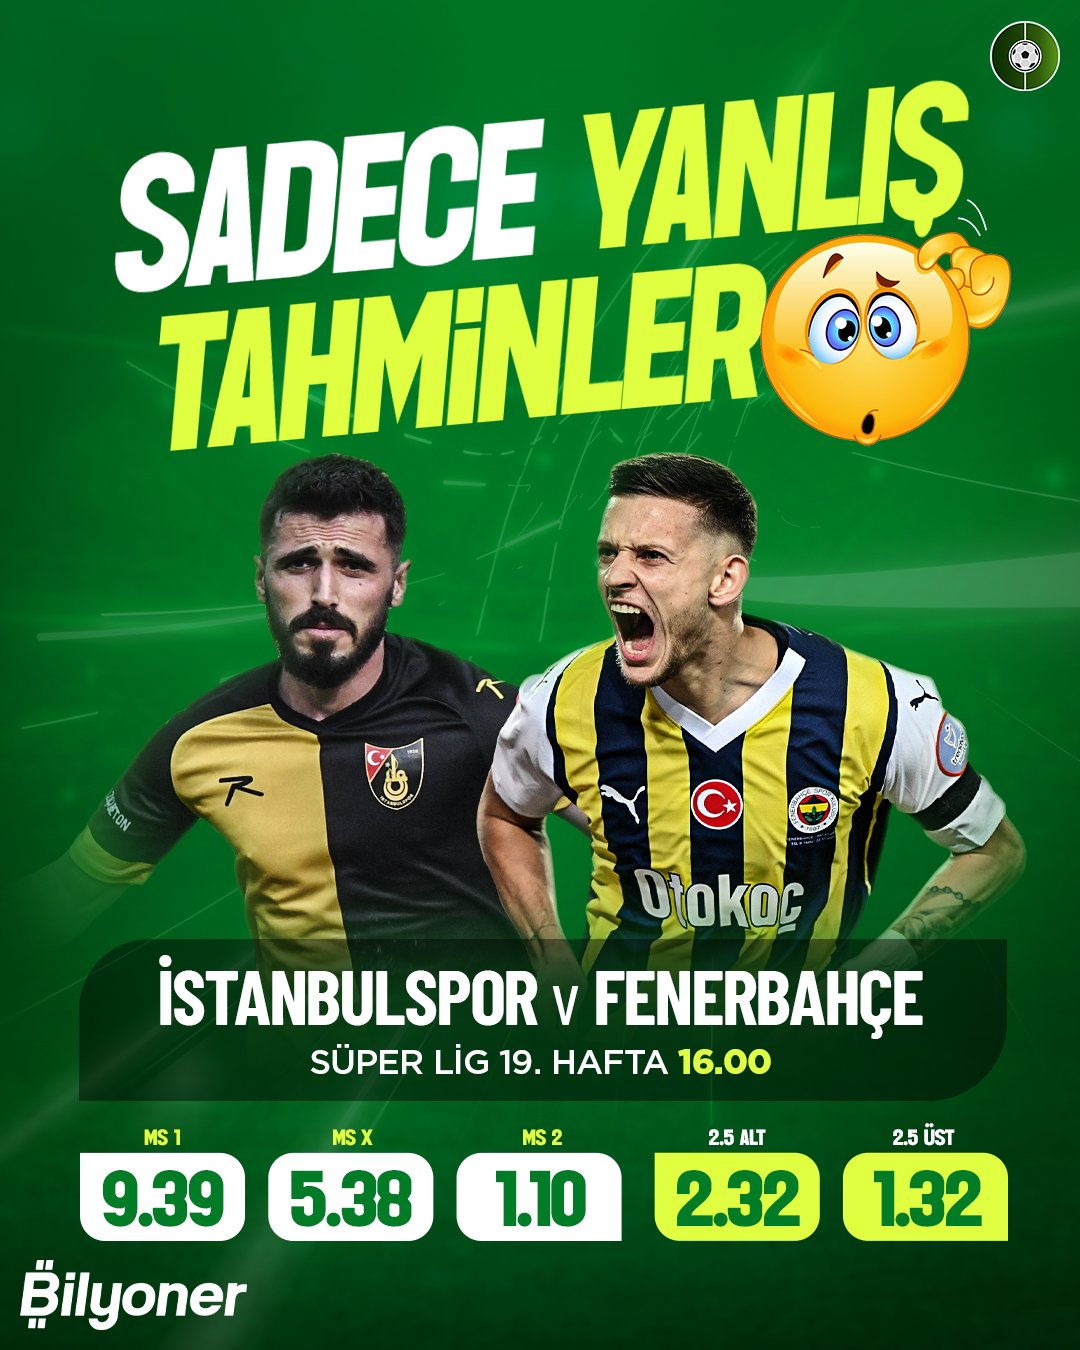 The Fenerbahçe vs Galatasaray Rivalry: The Clash of Turkish Football Giants